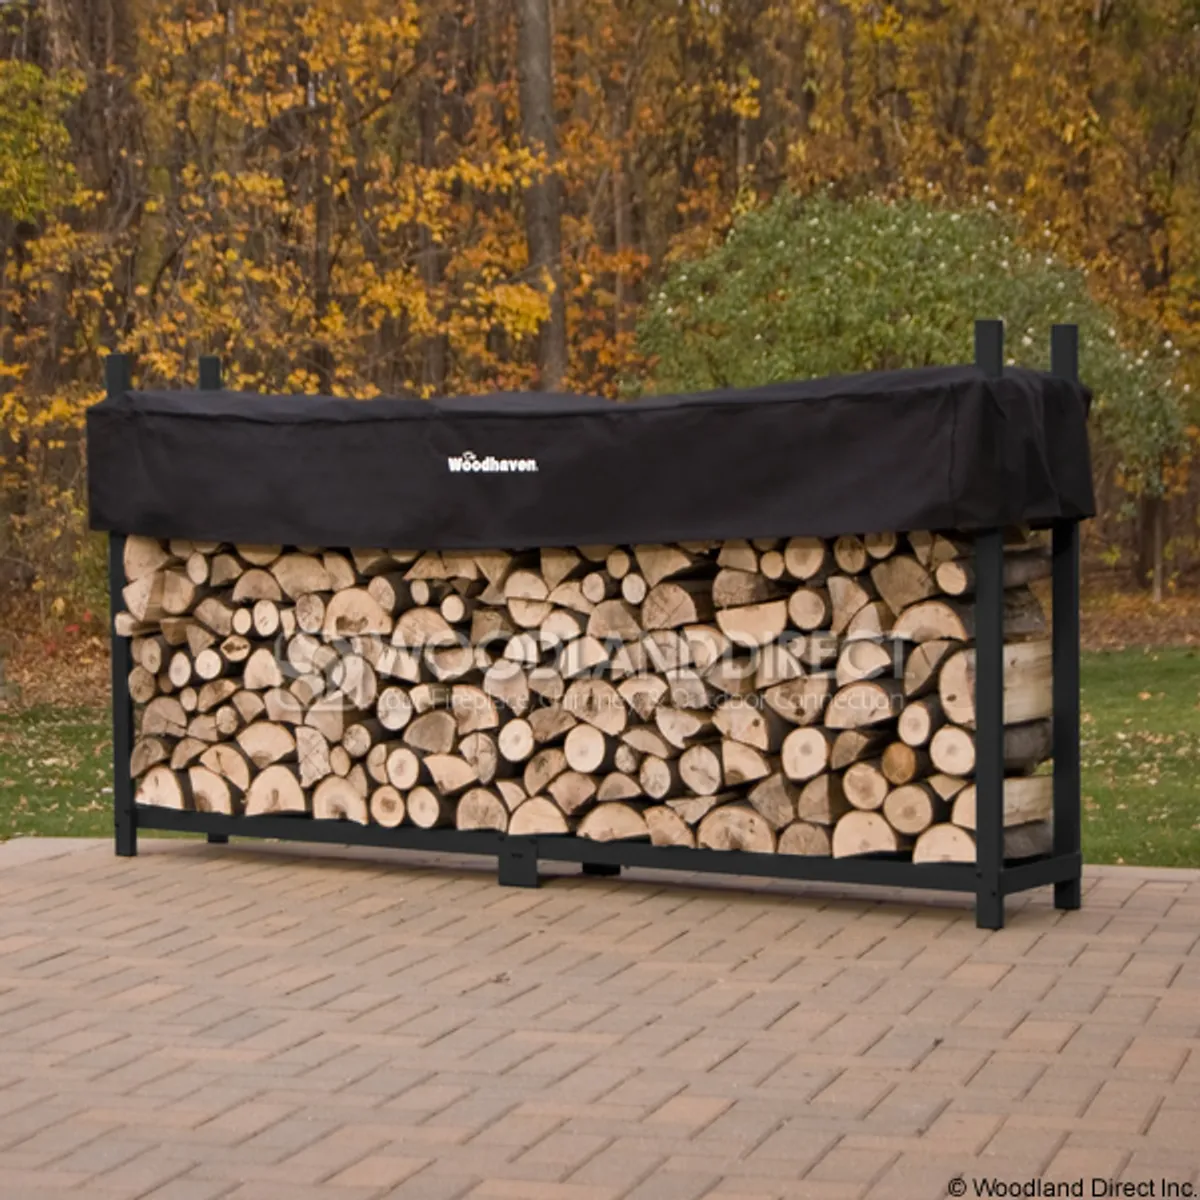 Firewood rack